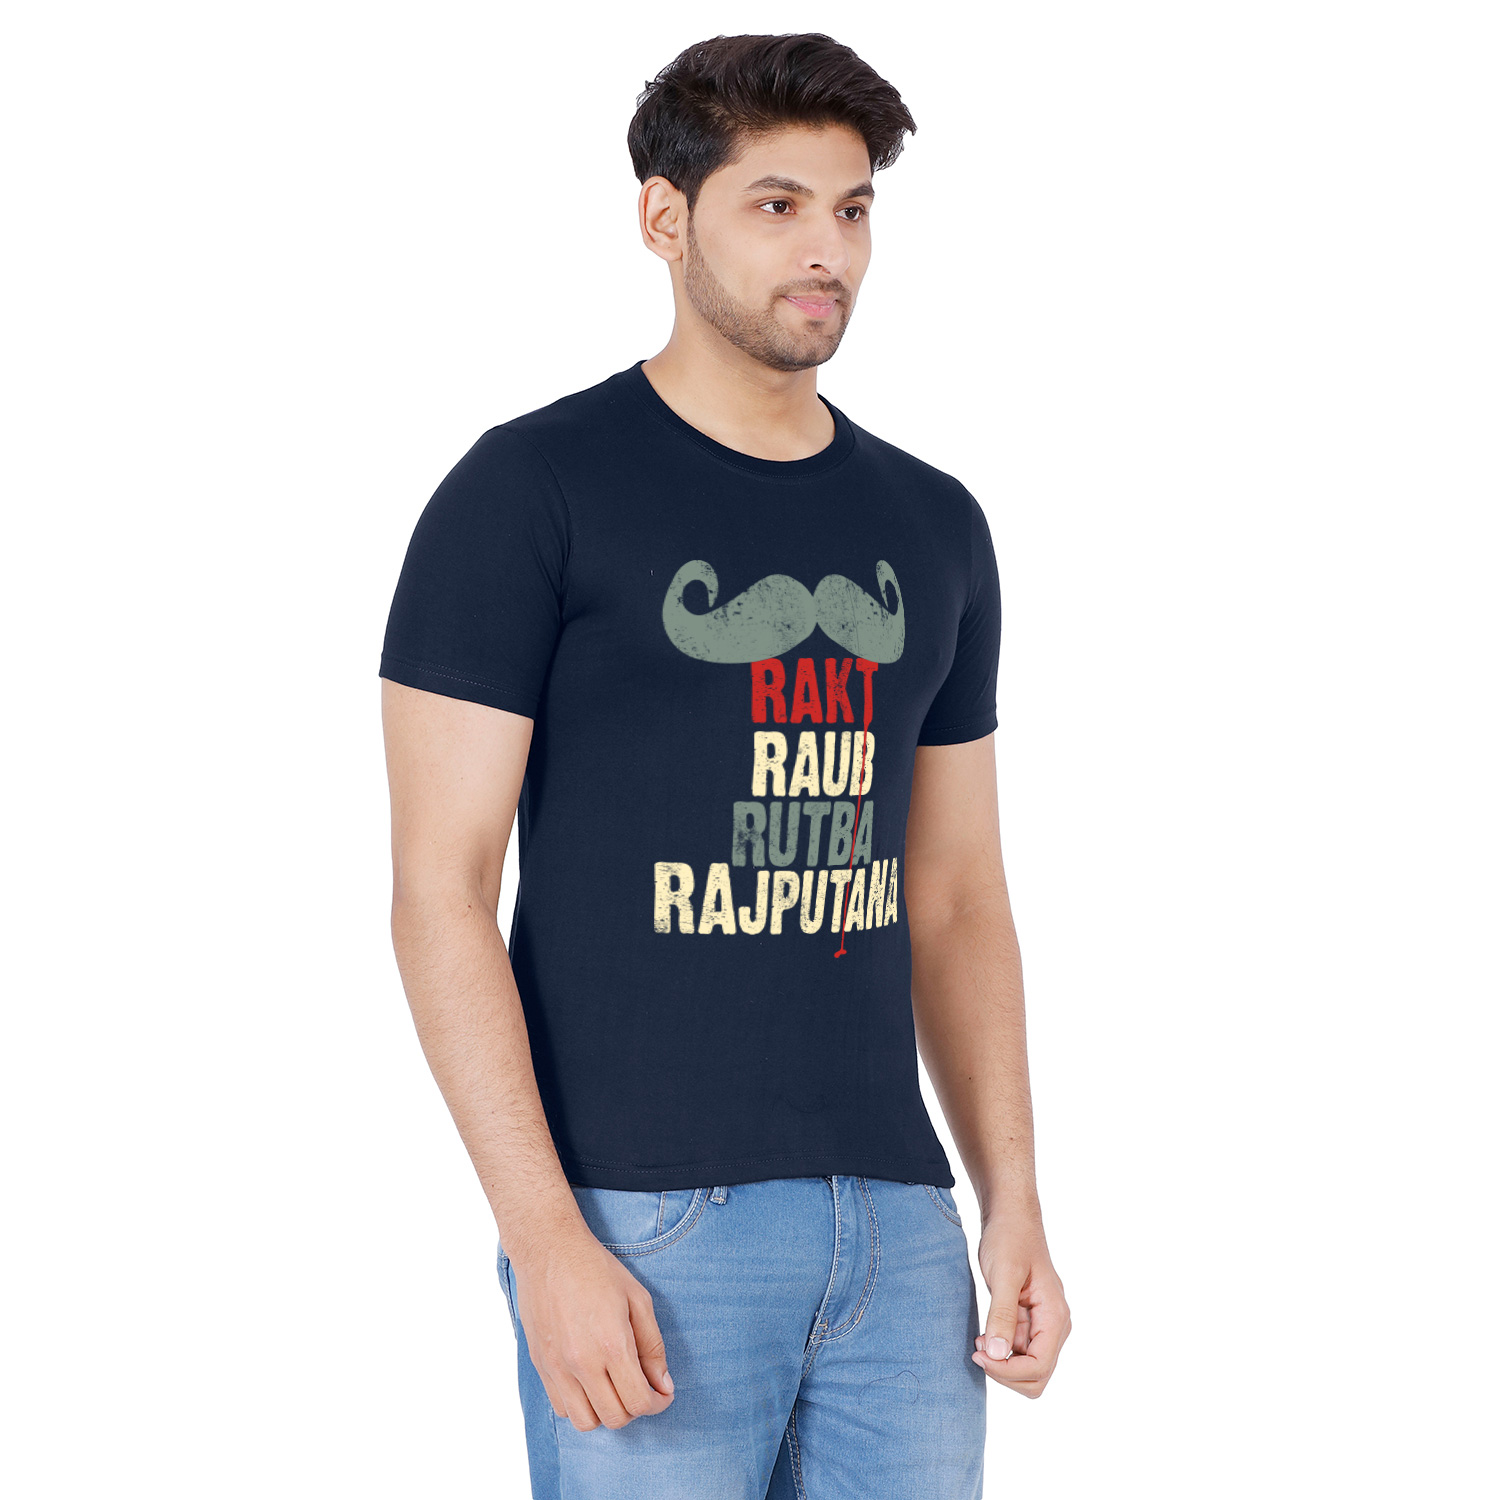 Rajputana - Tshirtwala Men's round neck navy blue t-shirt